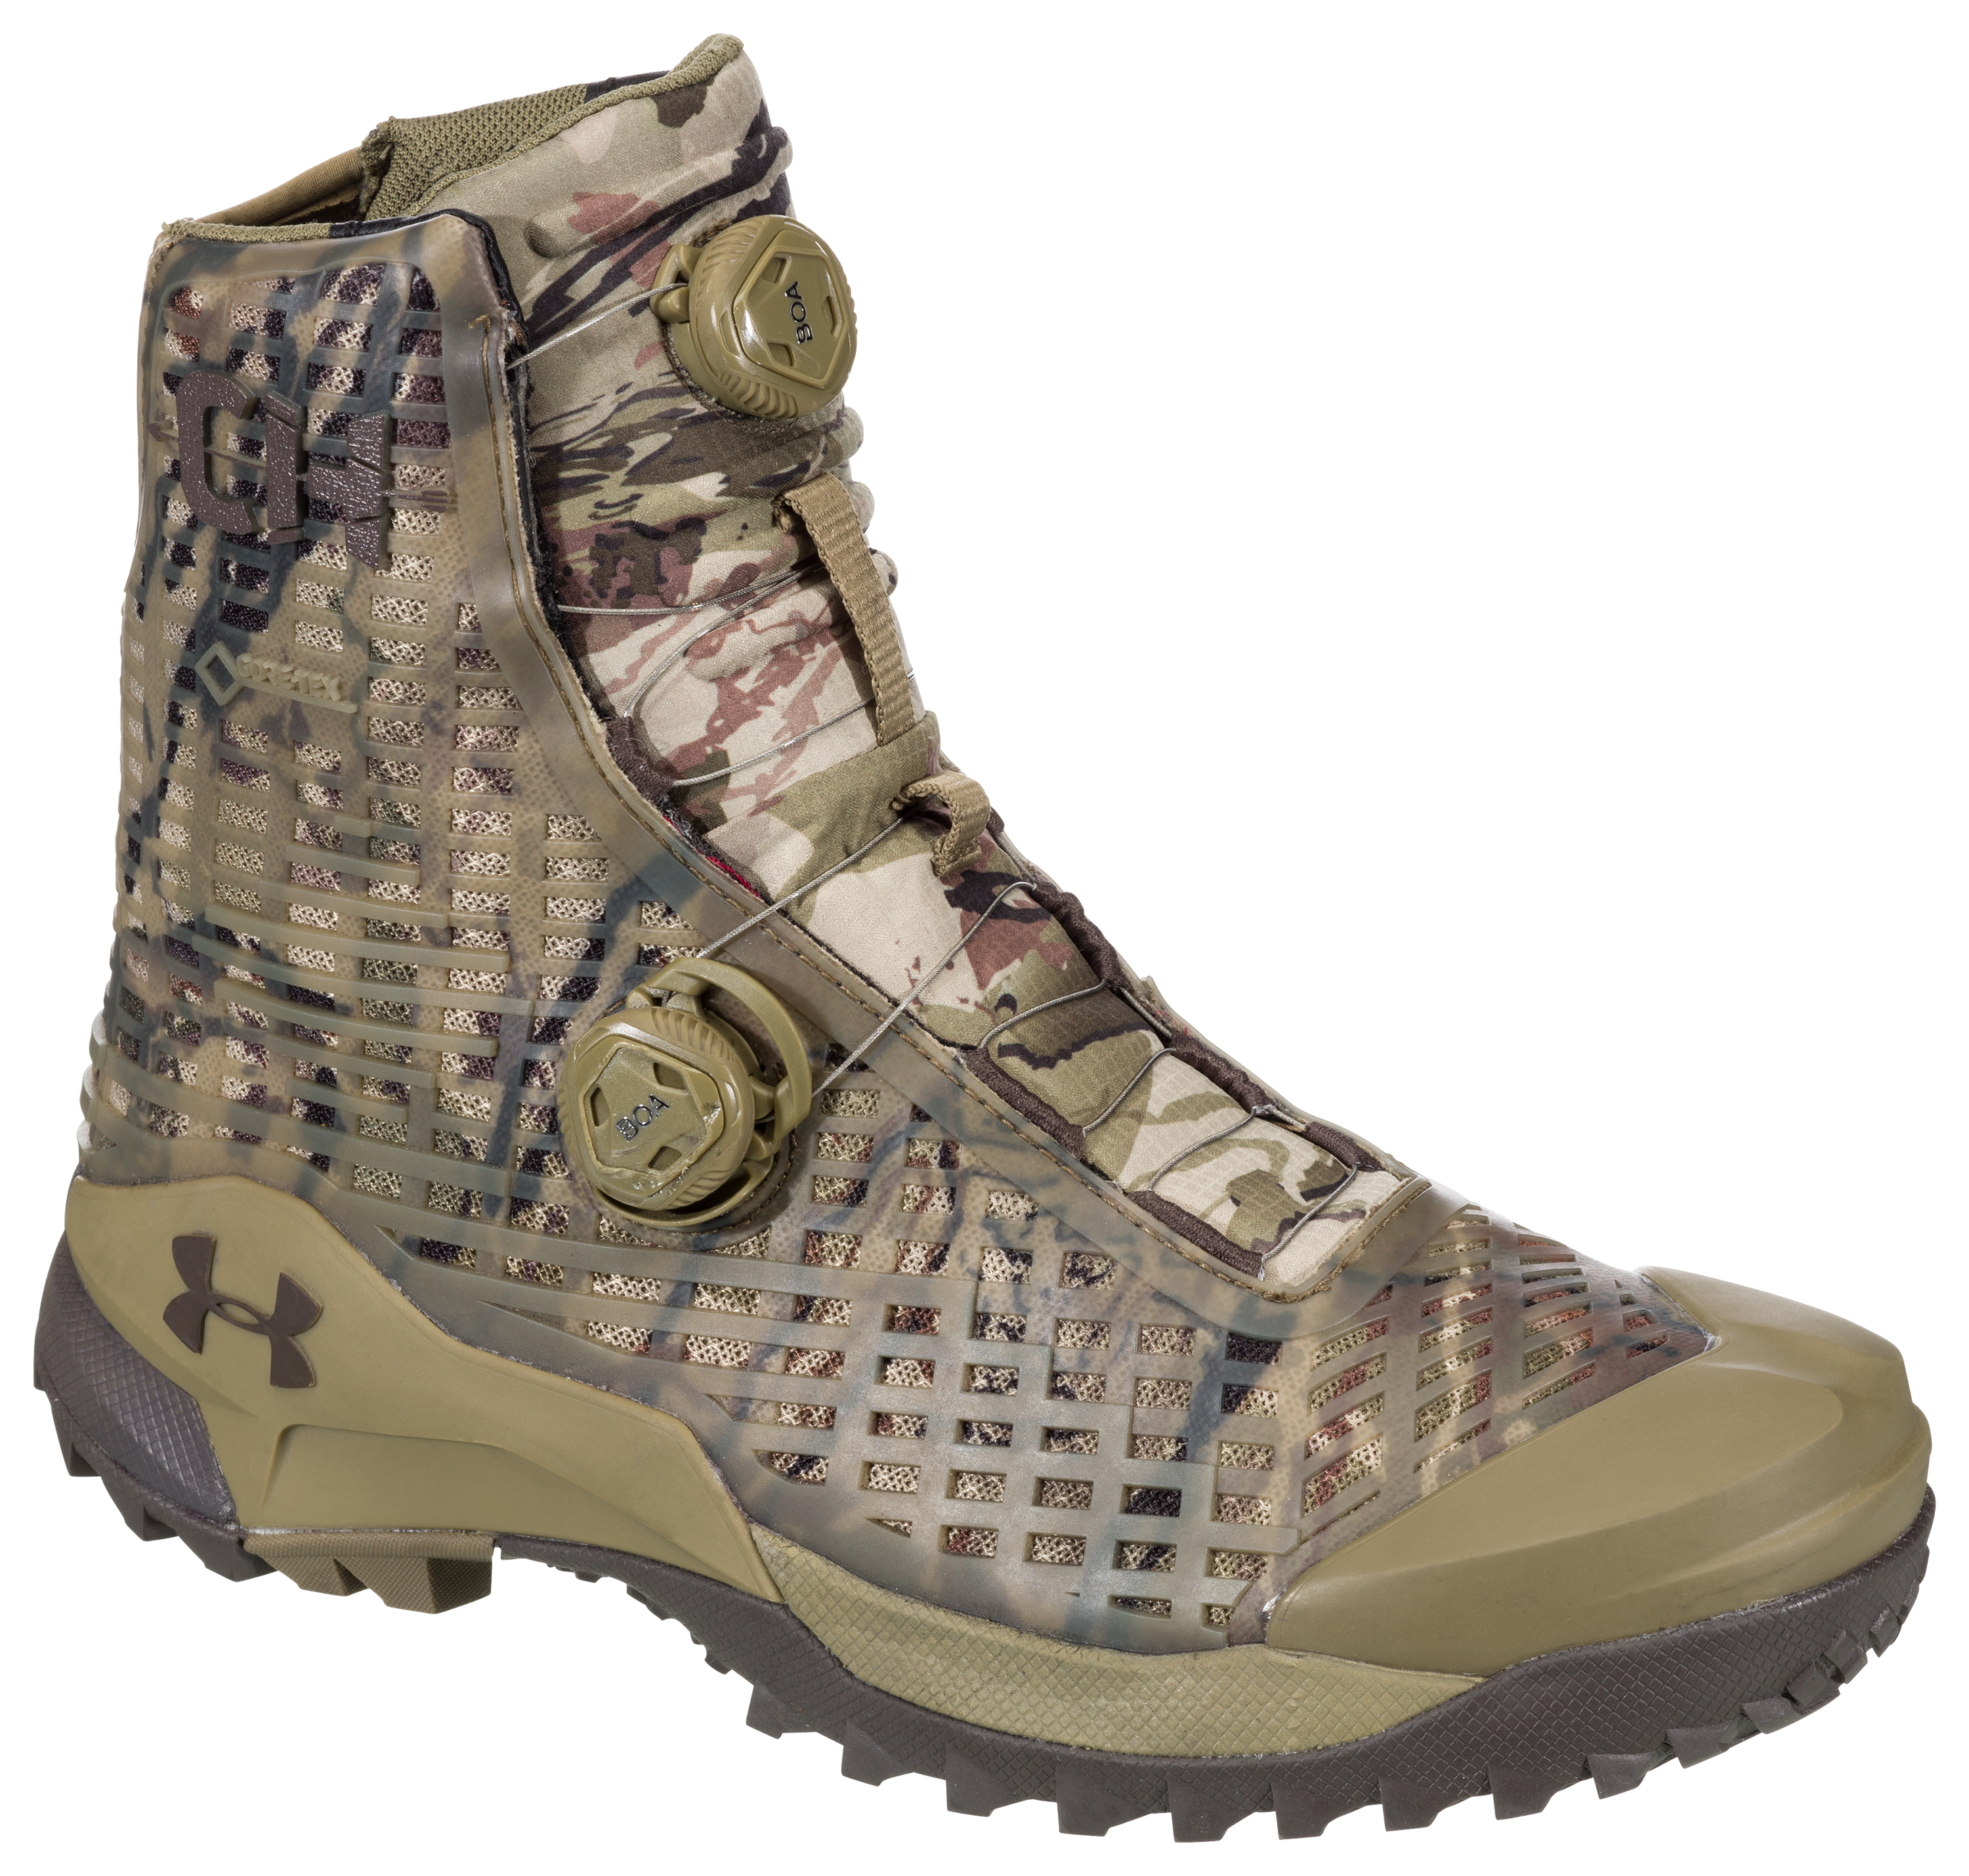 Under Armour CH1 GTX GORE-TEX Tactical Boots  for Men - Bayou Ridge Reaper Camo Barren - 9 5M